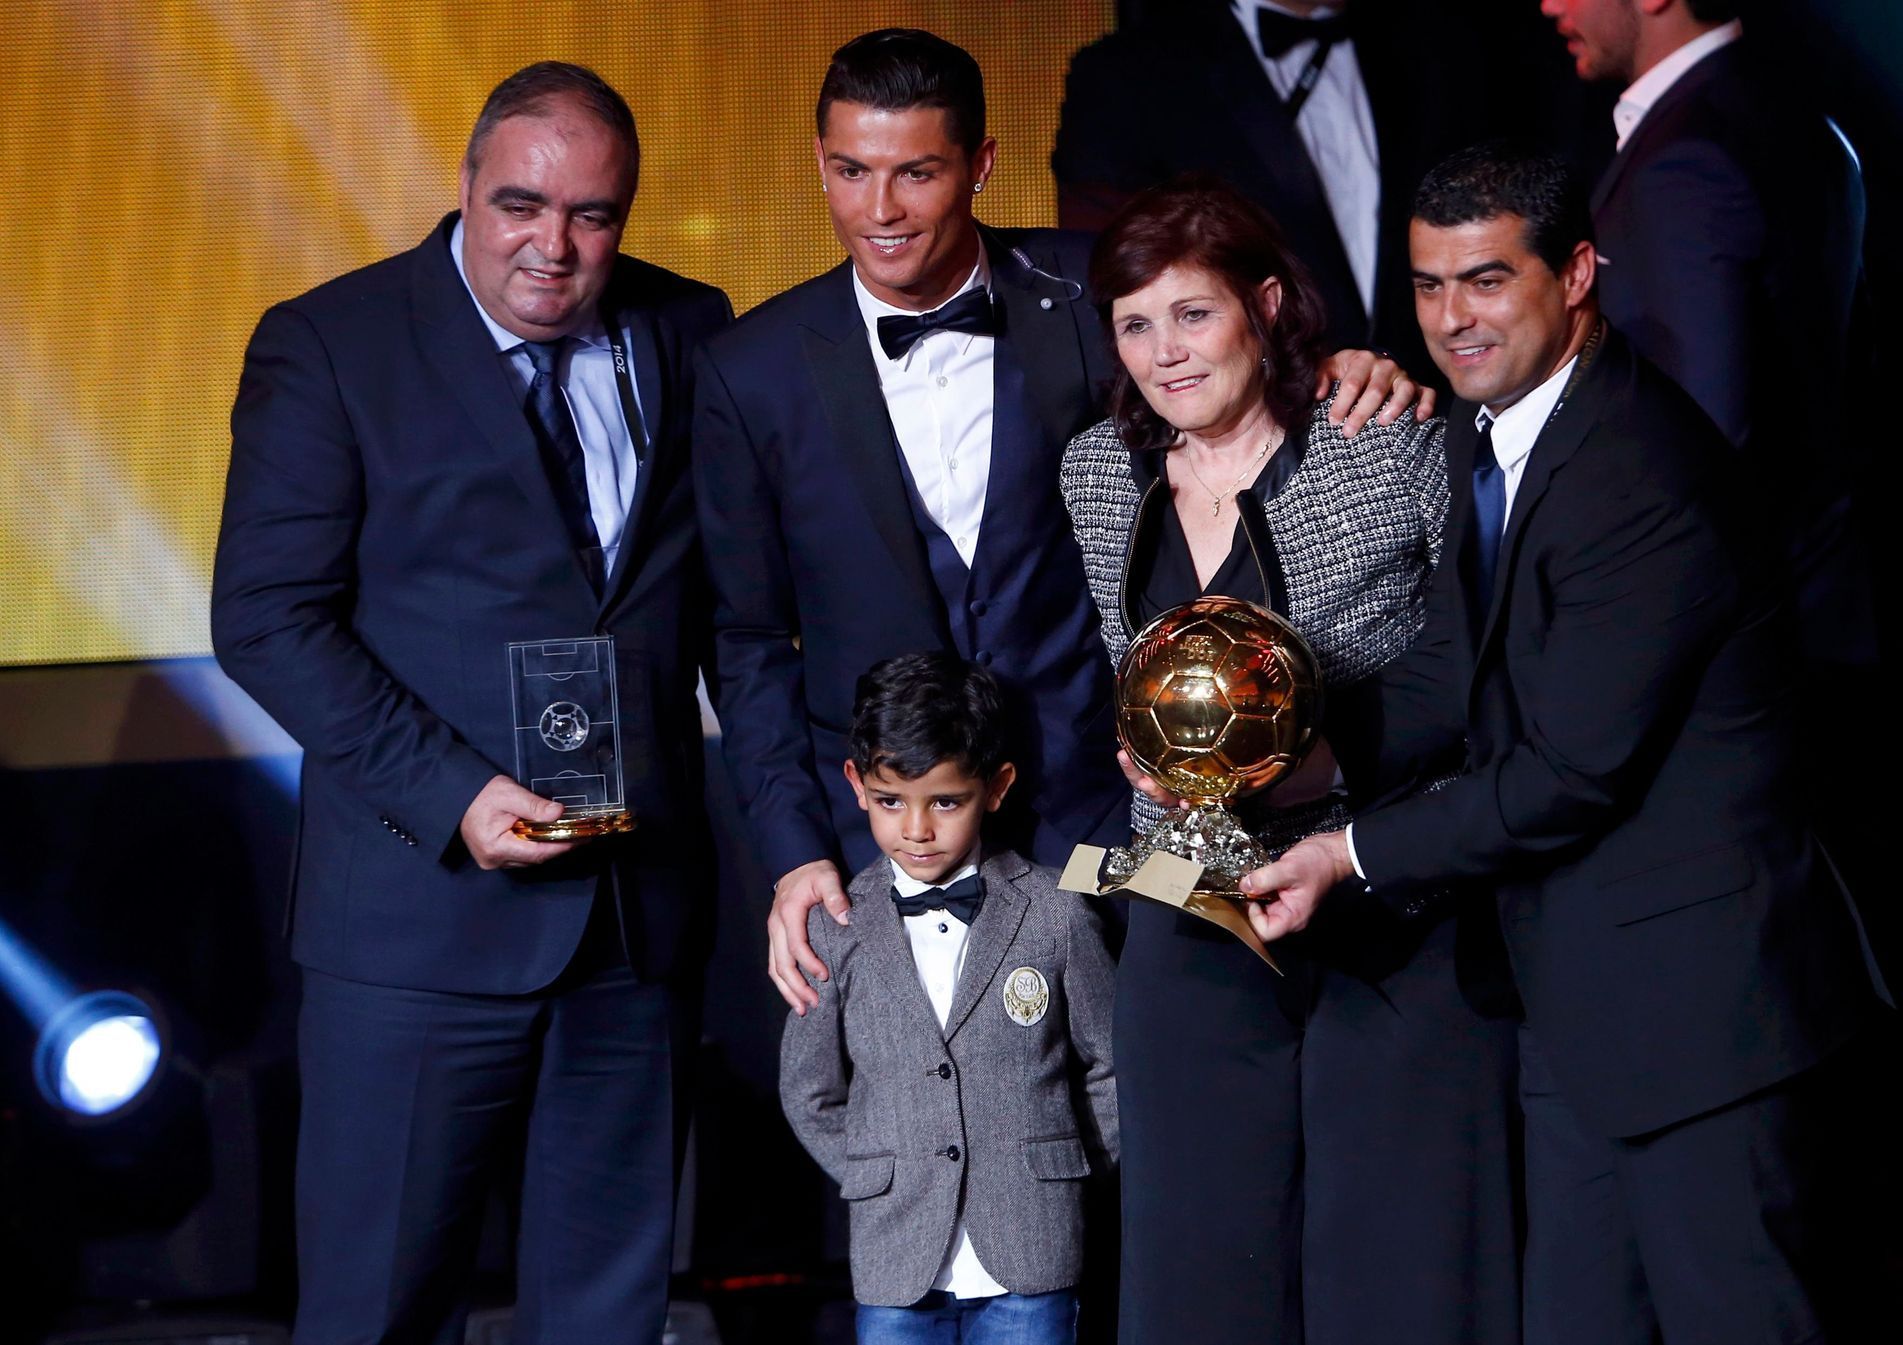 FIFA Ballon d'Or winner Ronaldo poses with his mother Maria Dolores dos Santos Aveiro and son Ronaldo Jr. after the FIFA Ballon d'Or 2014 soccer awards ceremony in Zurich